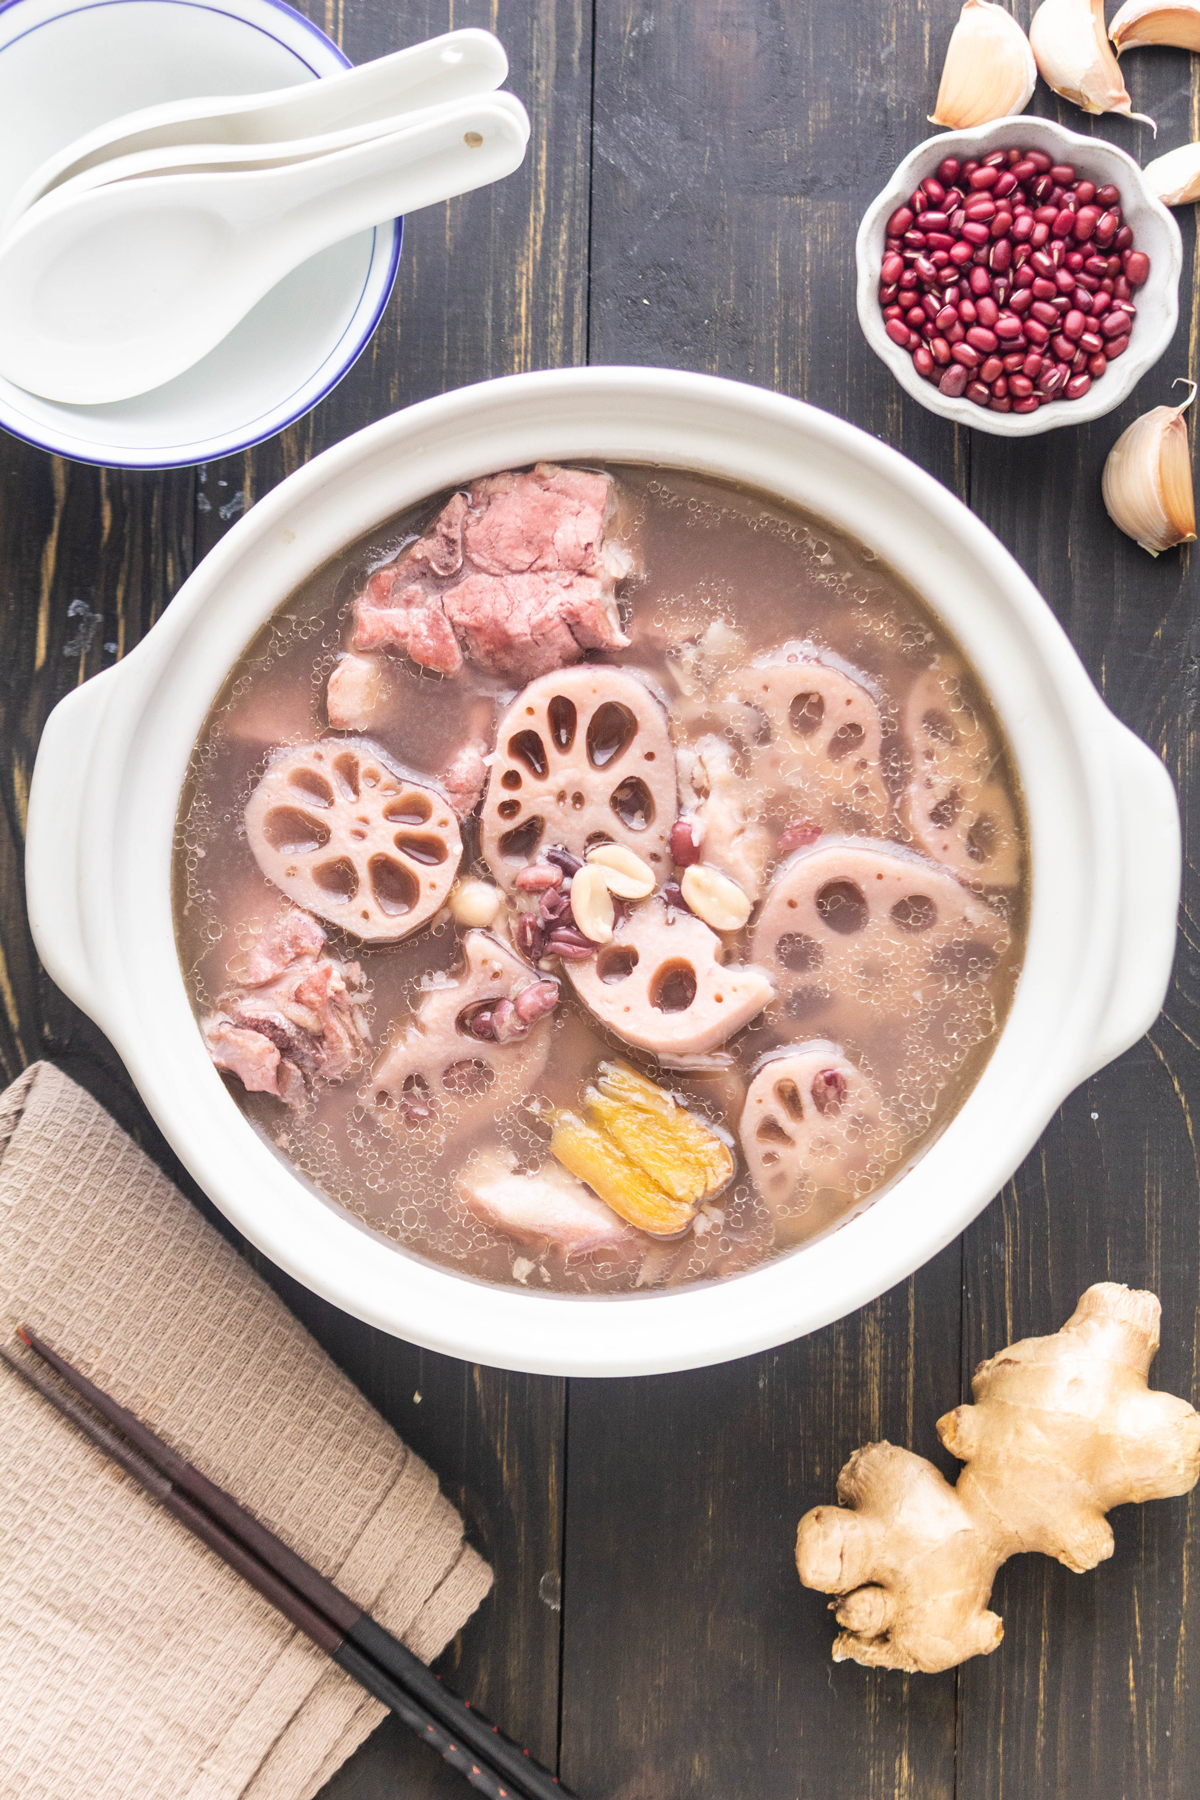 Lotus Root and Pork Soup (蓮藕汤) - Wok and Kin